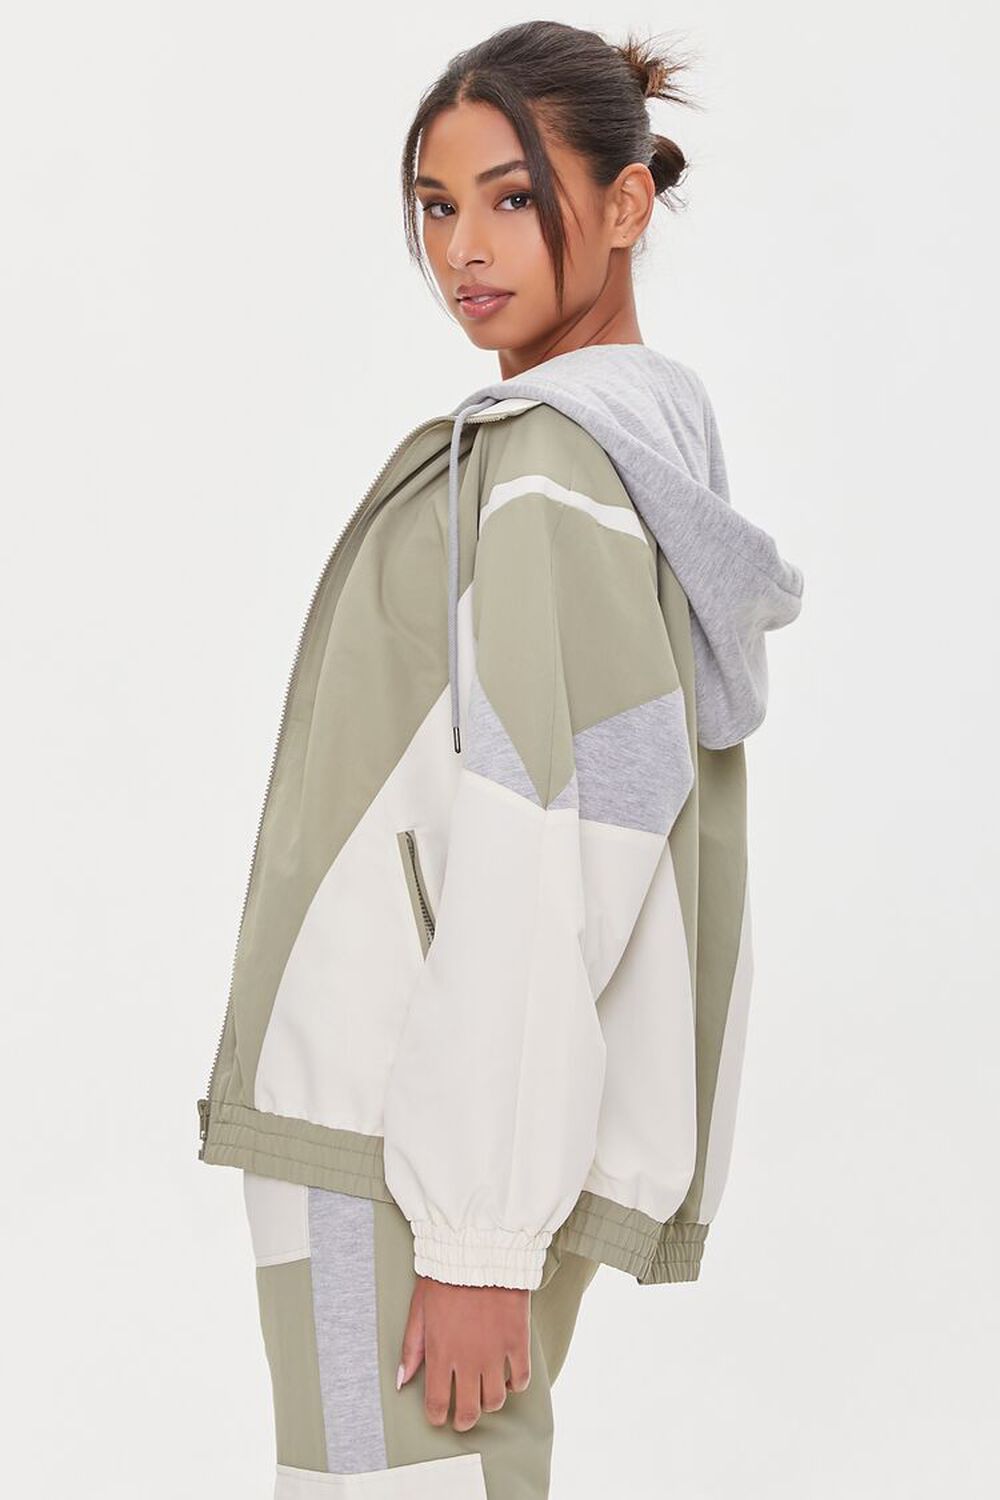 SAGE/MULTI Colorblock Zip-Up Hooded Jacket, image 2